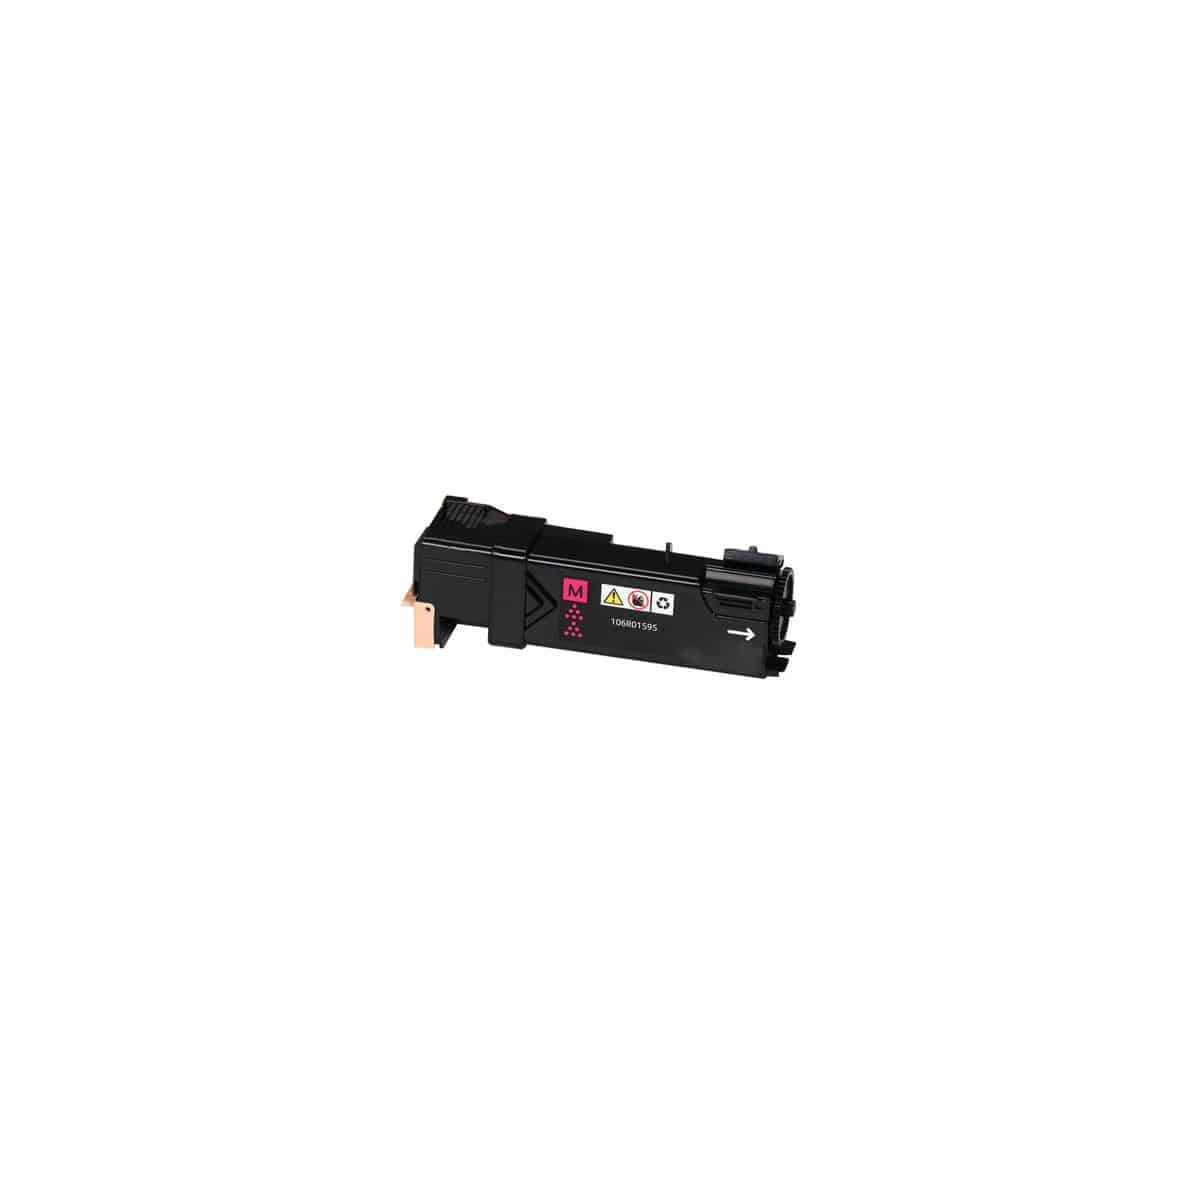 6500 Toner laser compatible Xerox 106R01595 - Magenta